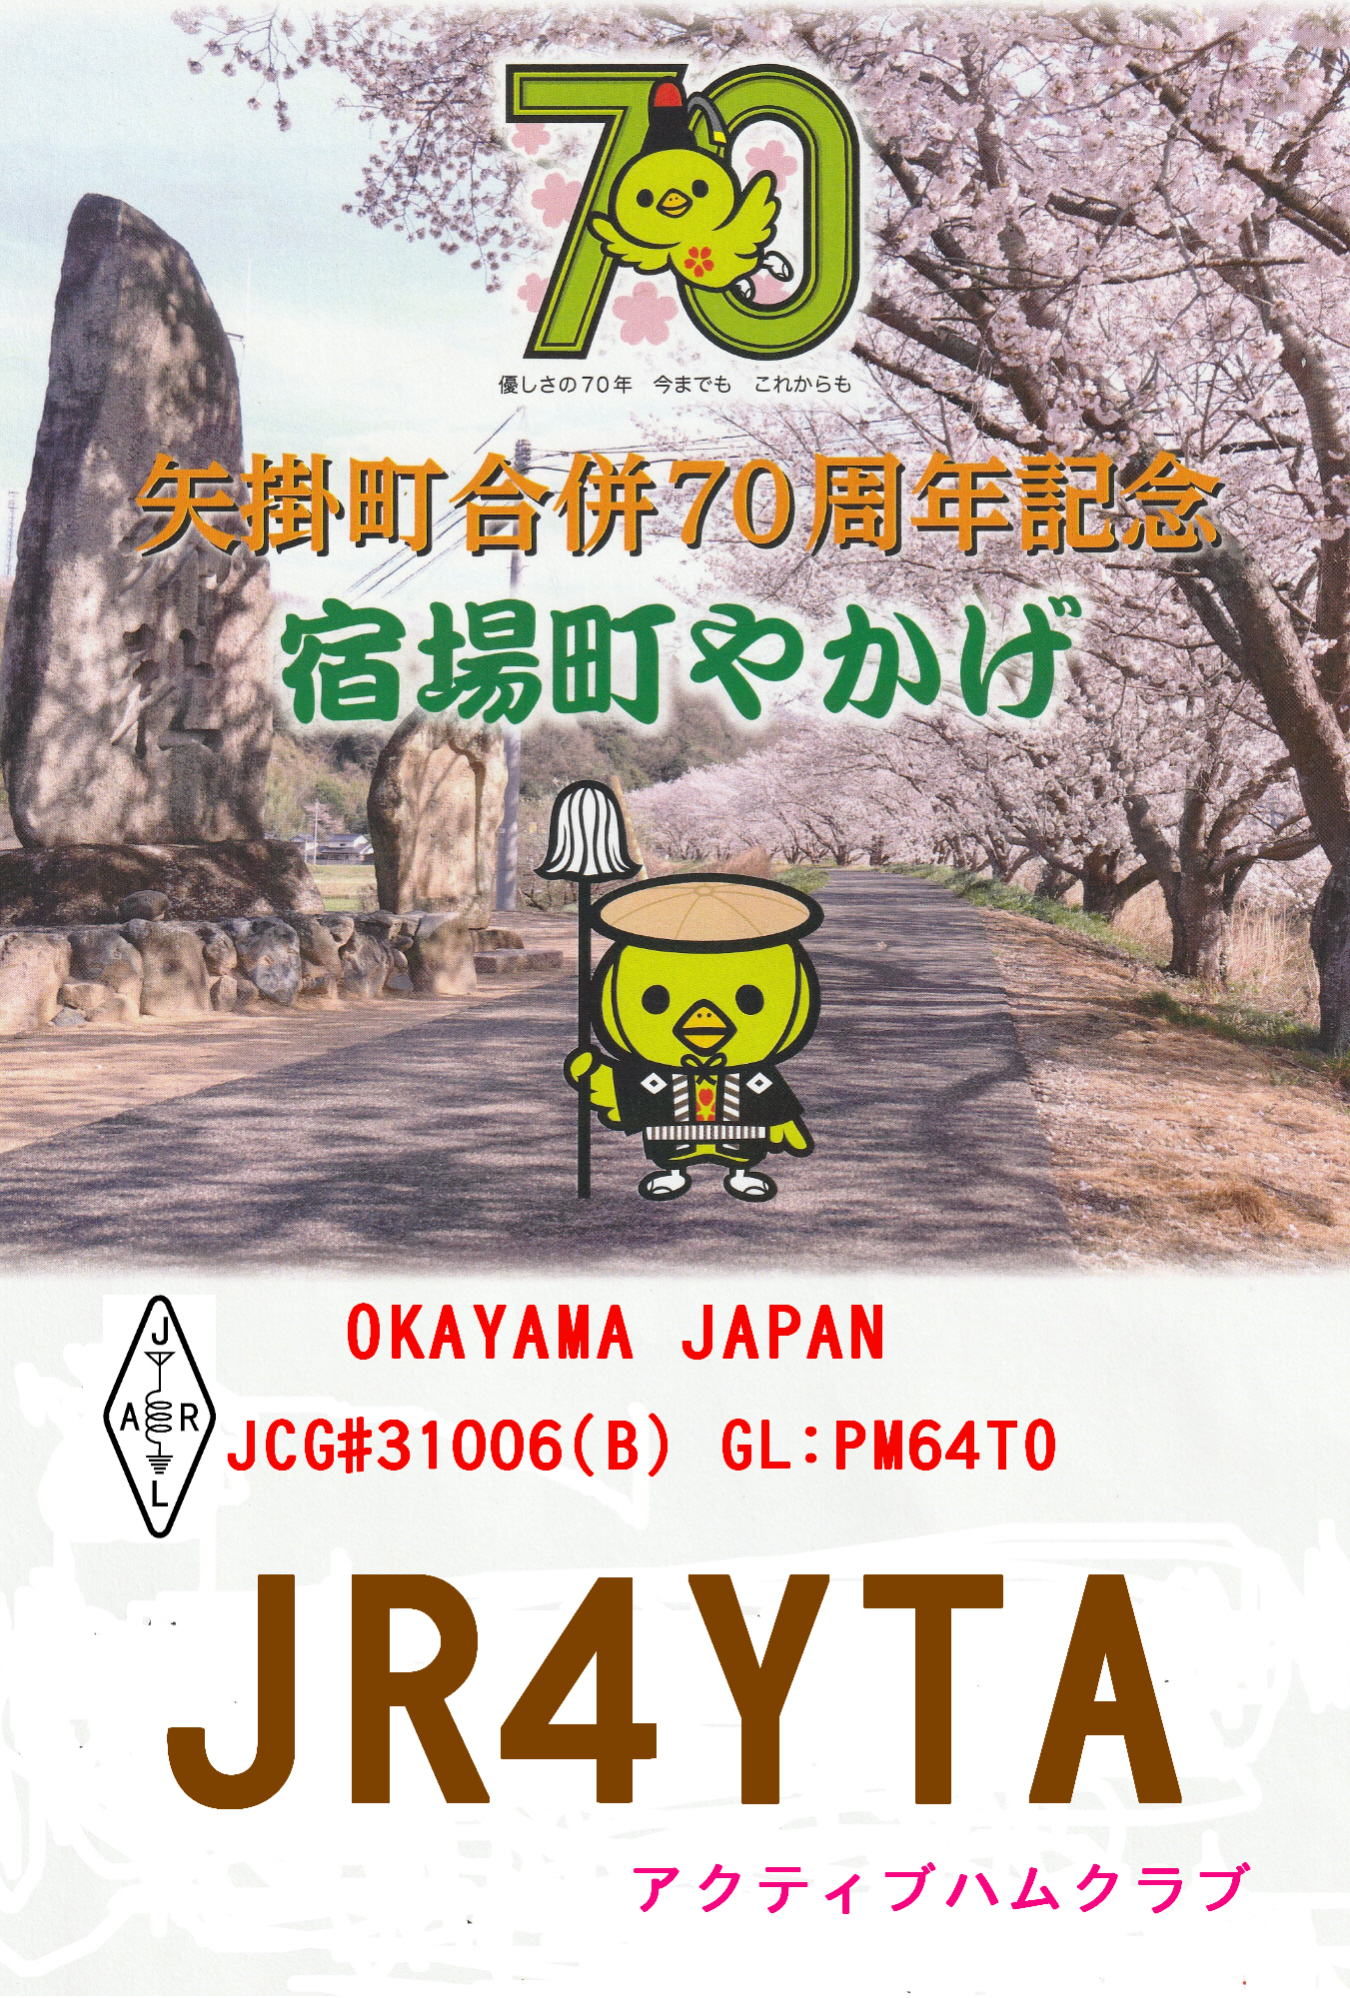 http://www.town.yakage.okayama.jp/img/QSL%E3%82%AB%E3%83%BC%E3%83%89.jpg